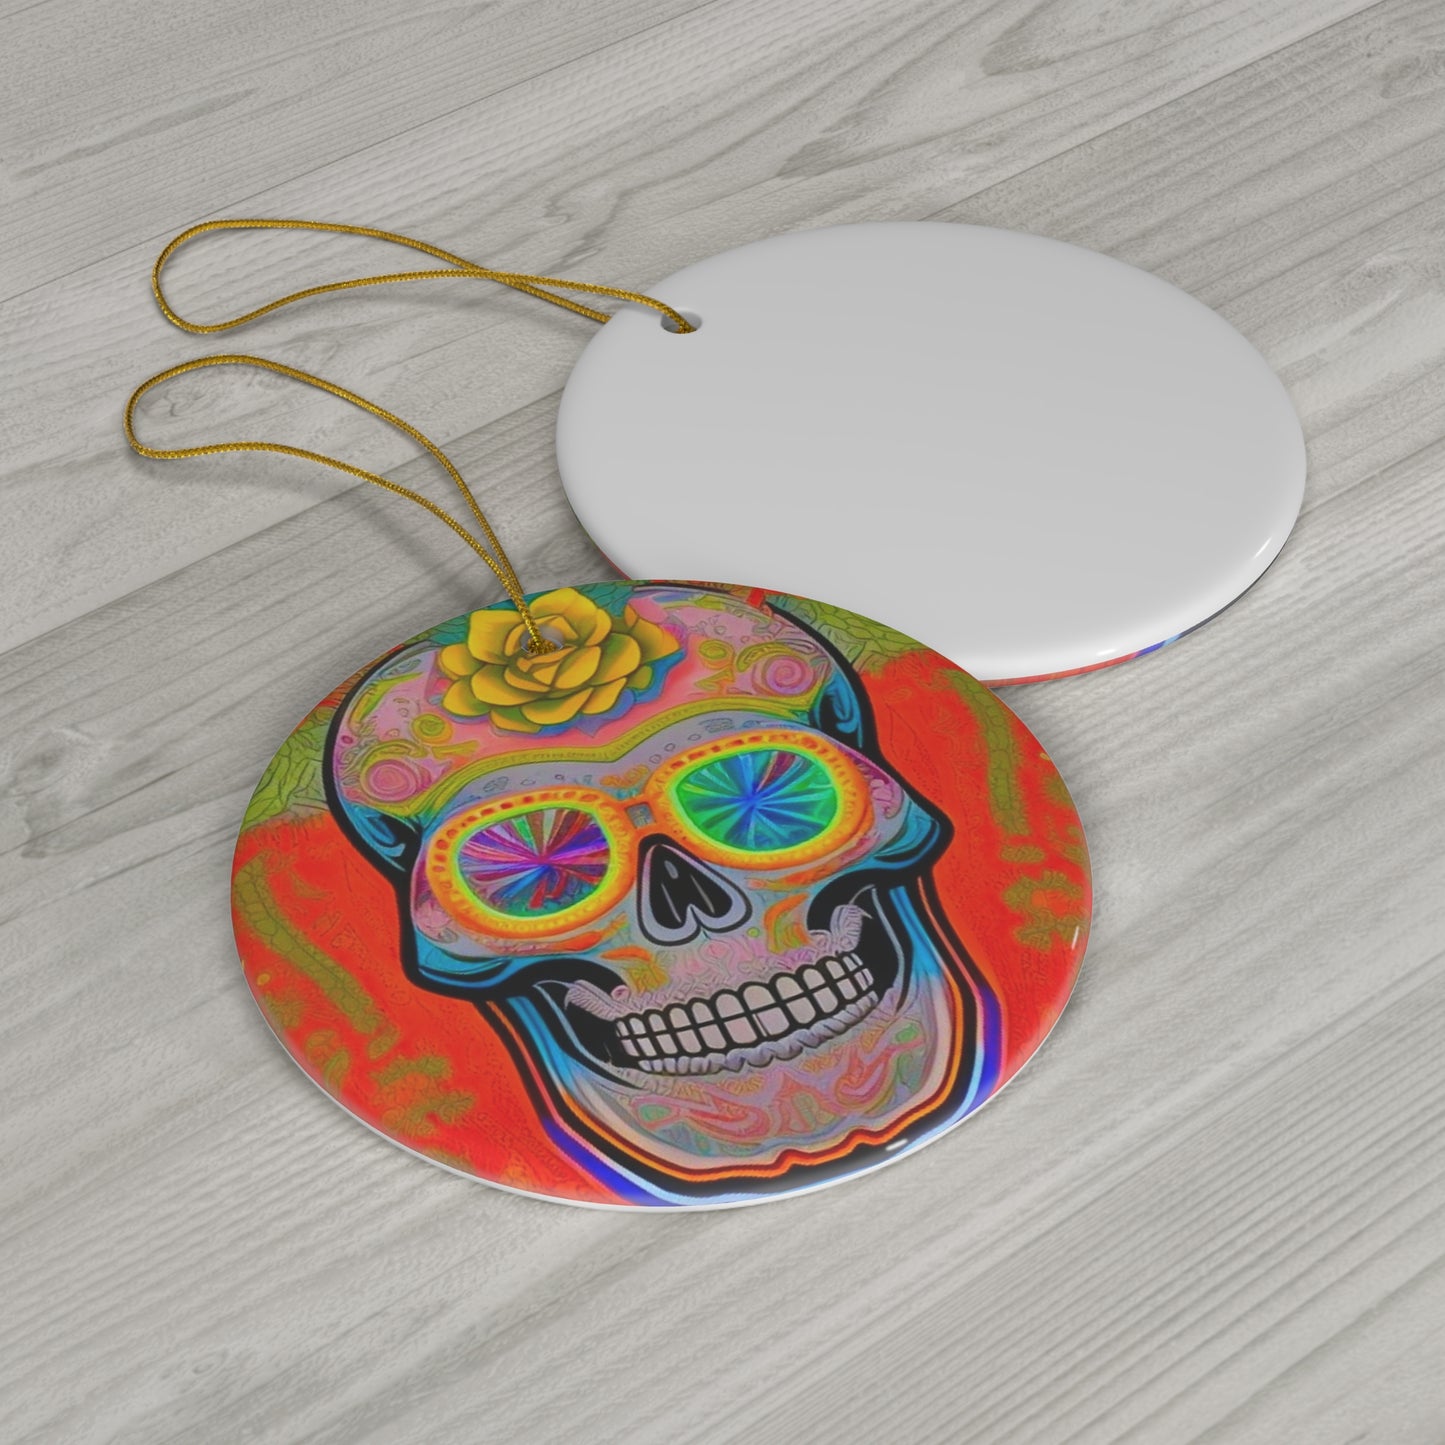 High Vibrations Skeleton Sugar Skull Neon Ceramic Ornament